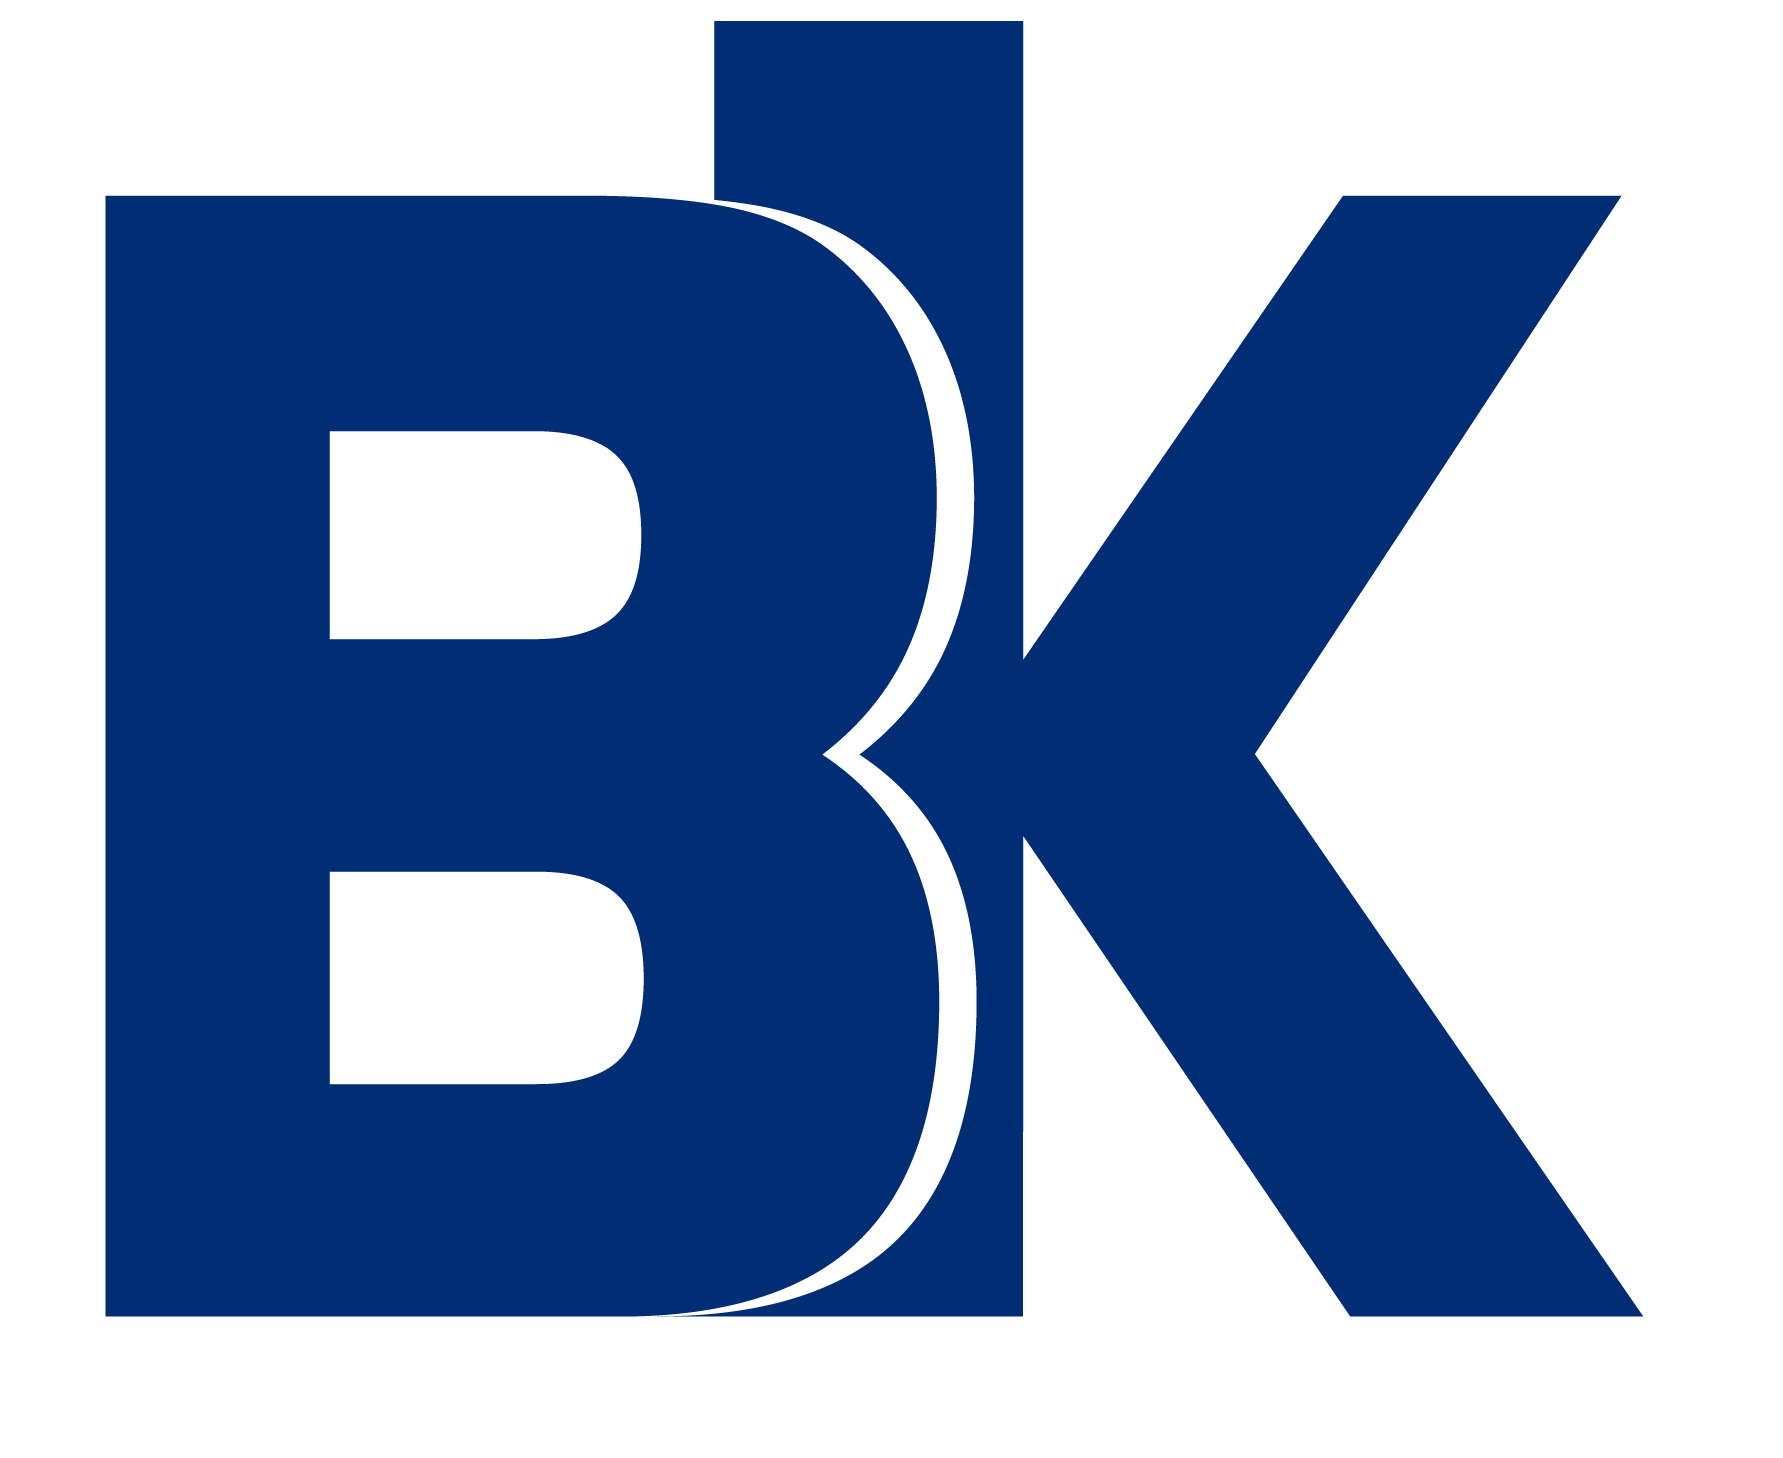 S bk ru. Логотип. BK лого. Логотип с буквами БК. БК рус логотип.